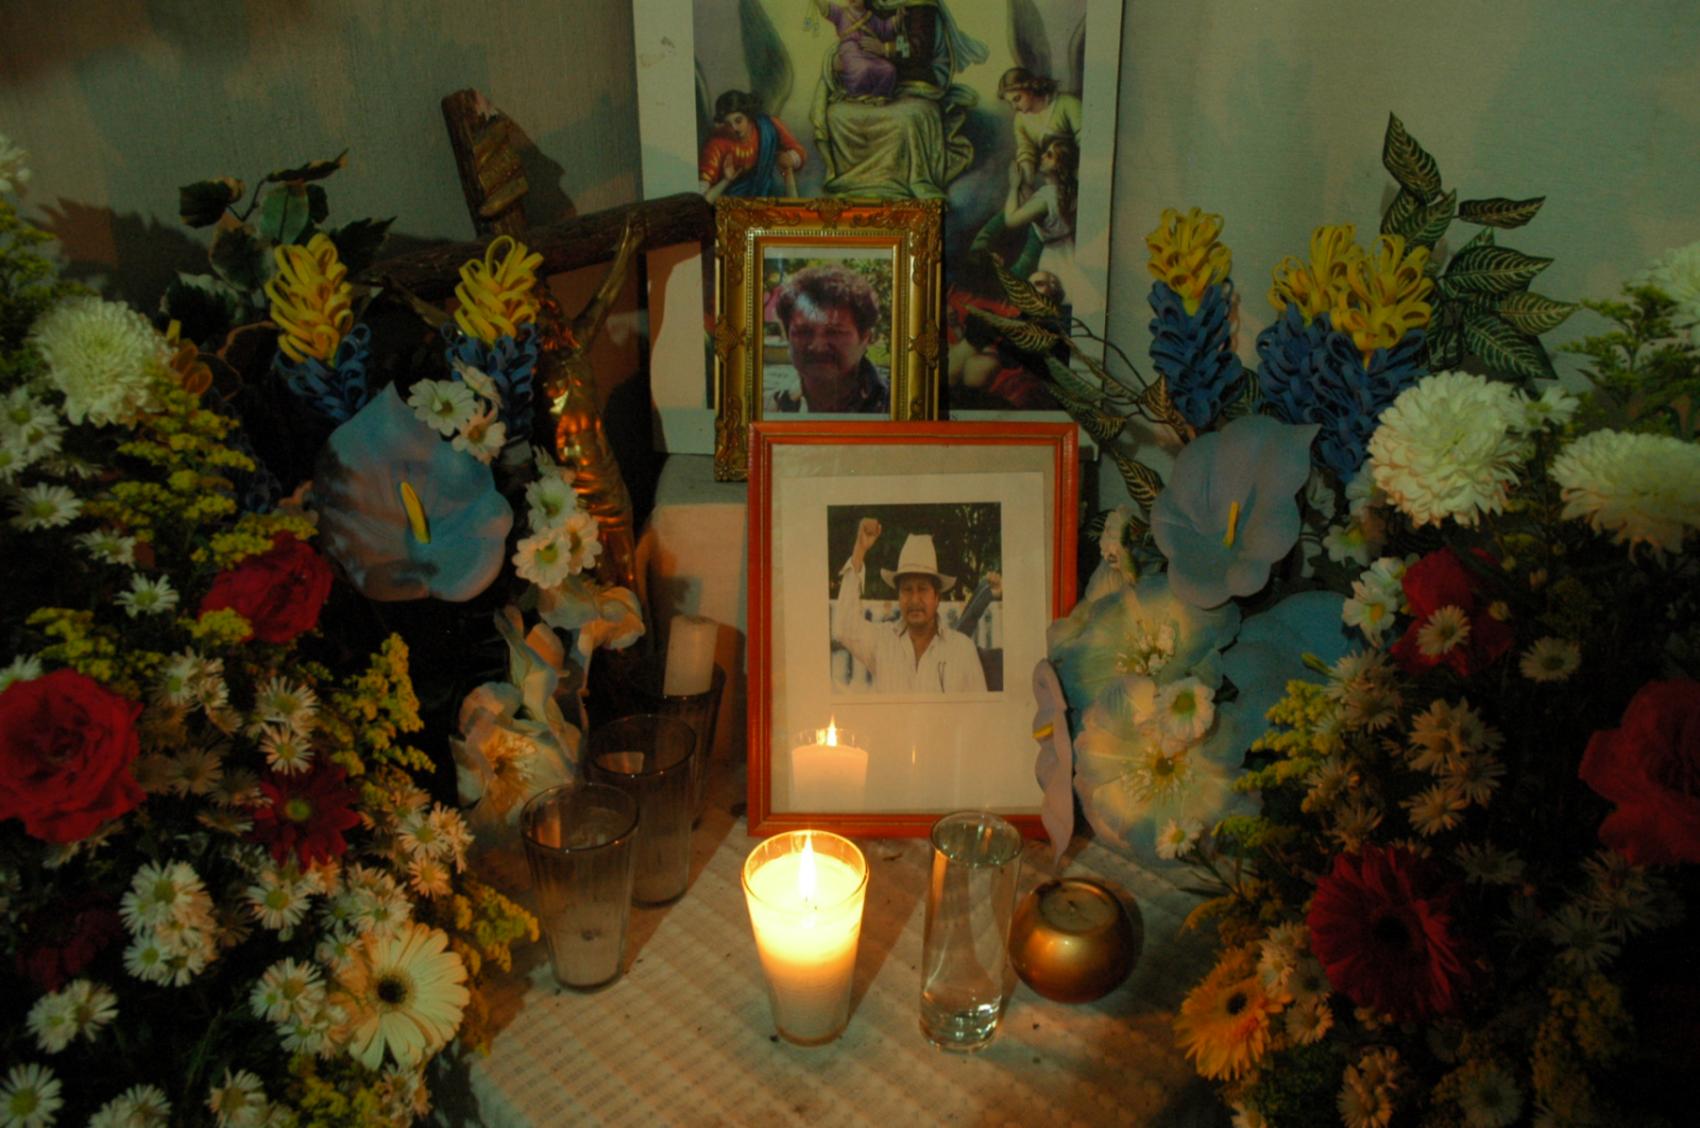 Memorial to Mariano Abarca Roblero (Credit: Dawn Paley)